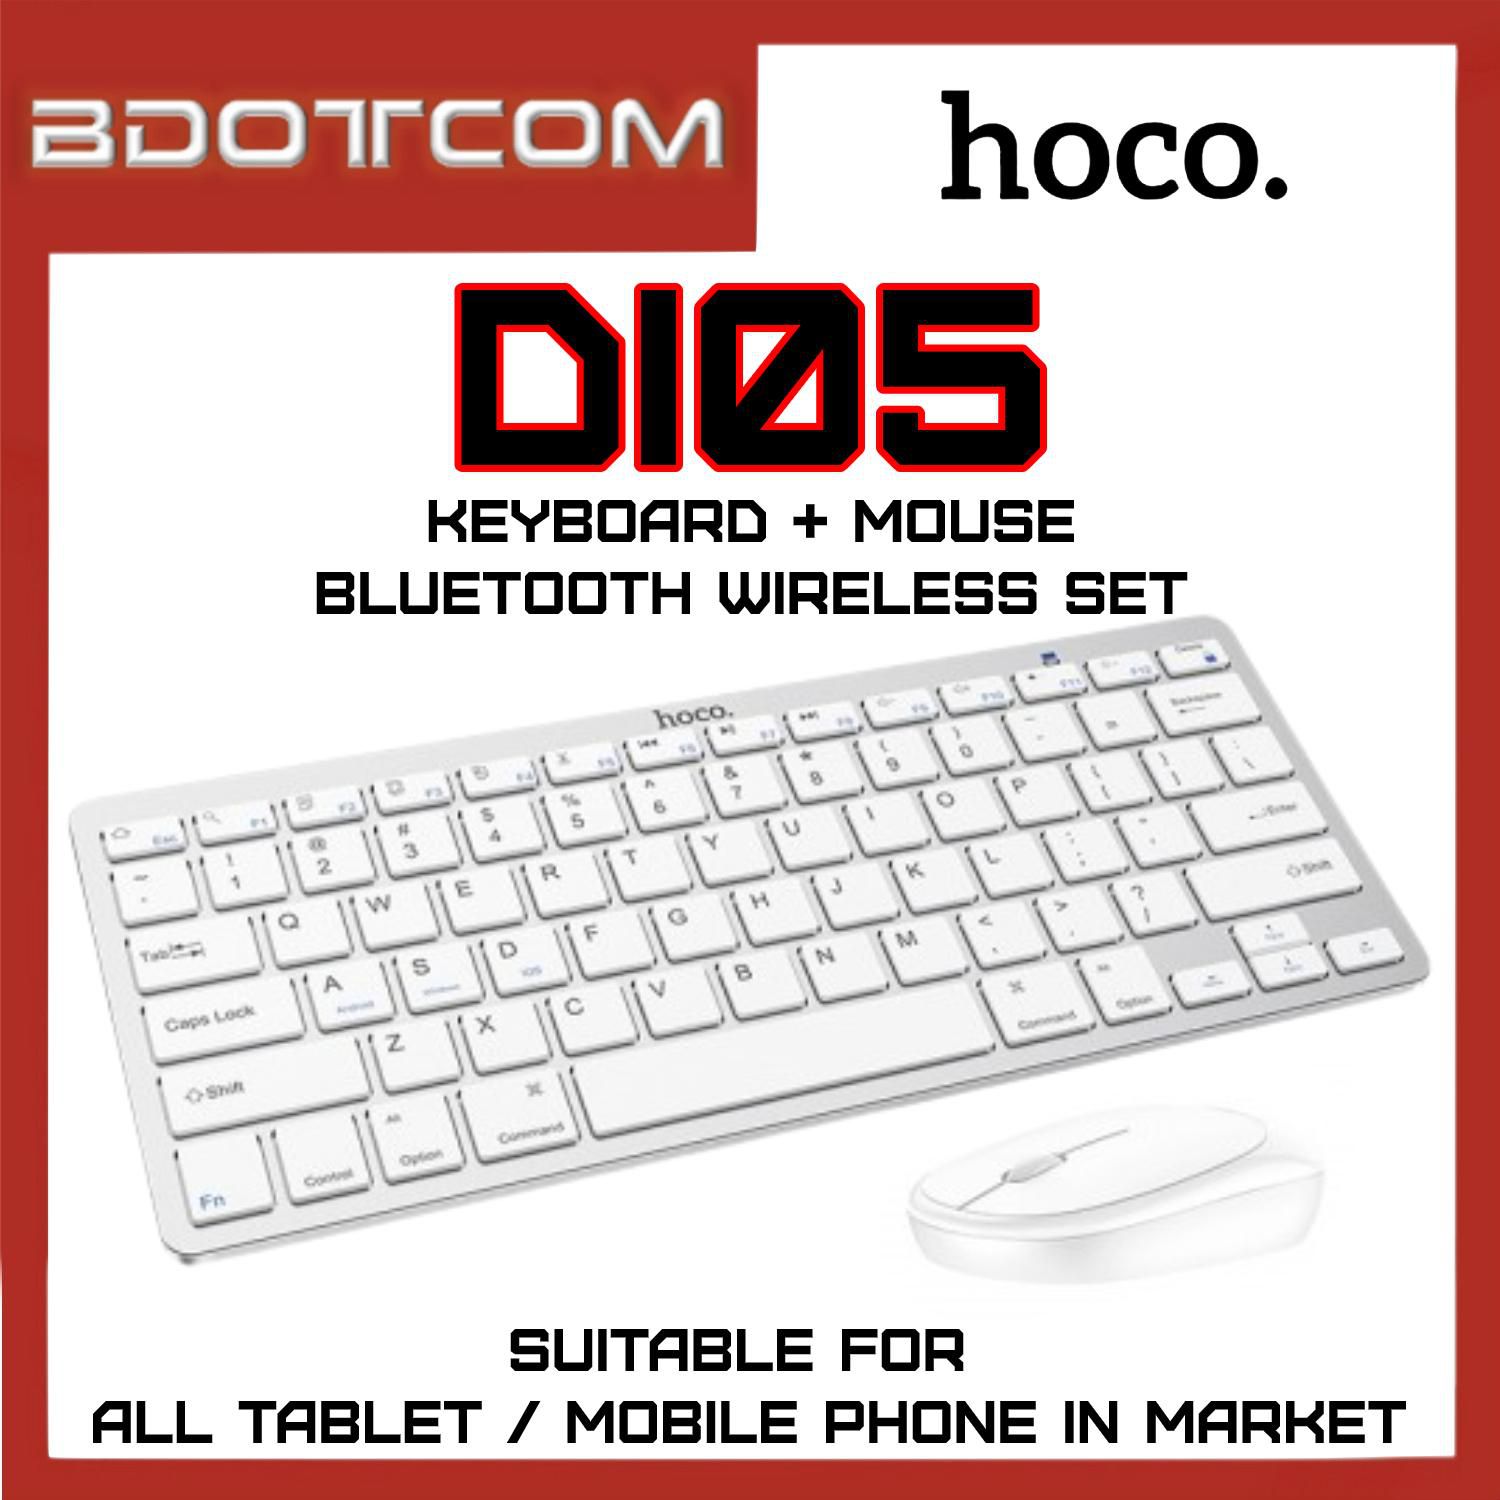 Hoco DI05 Bluetooth Wireless Keyboard + Wireless Mouse Set